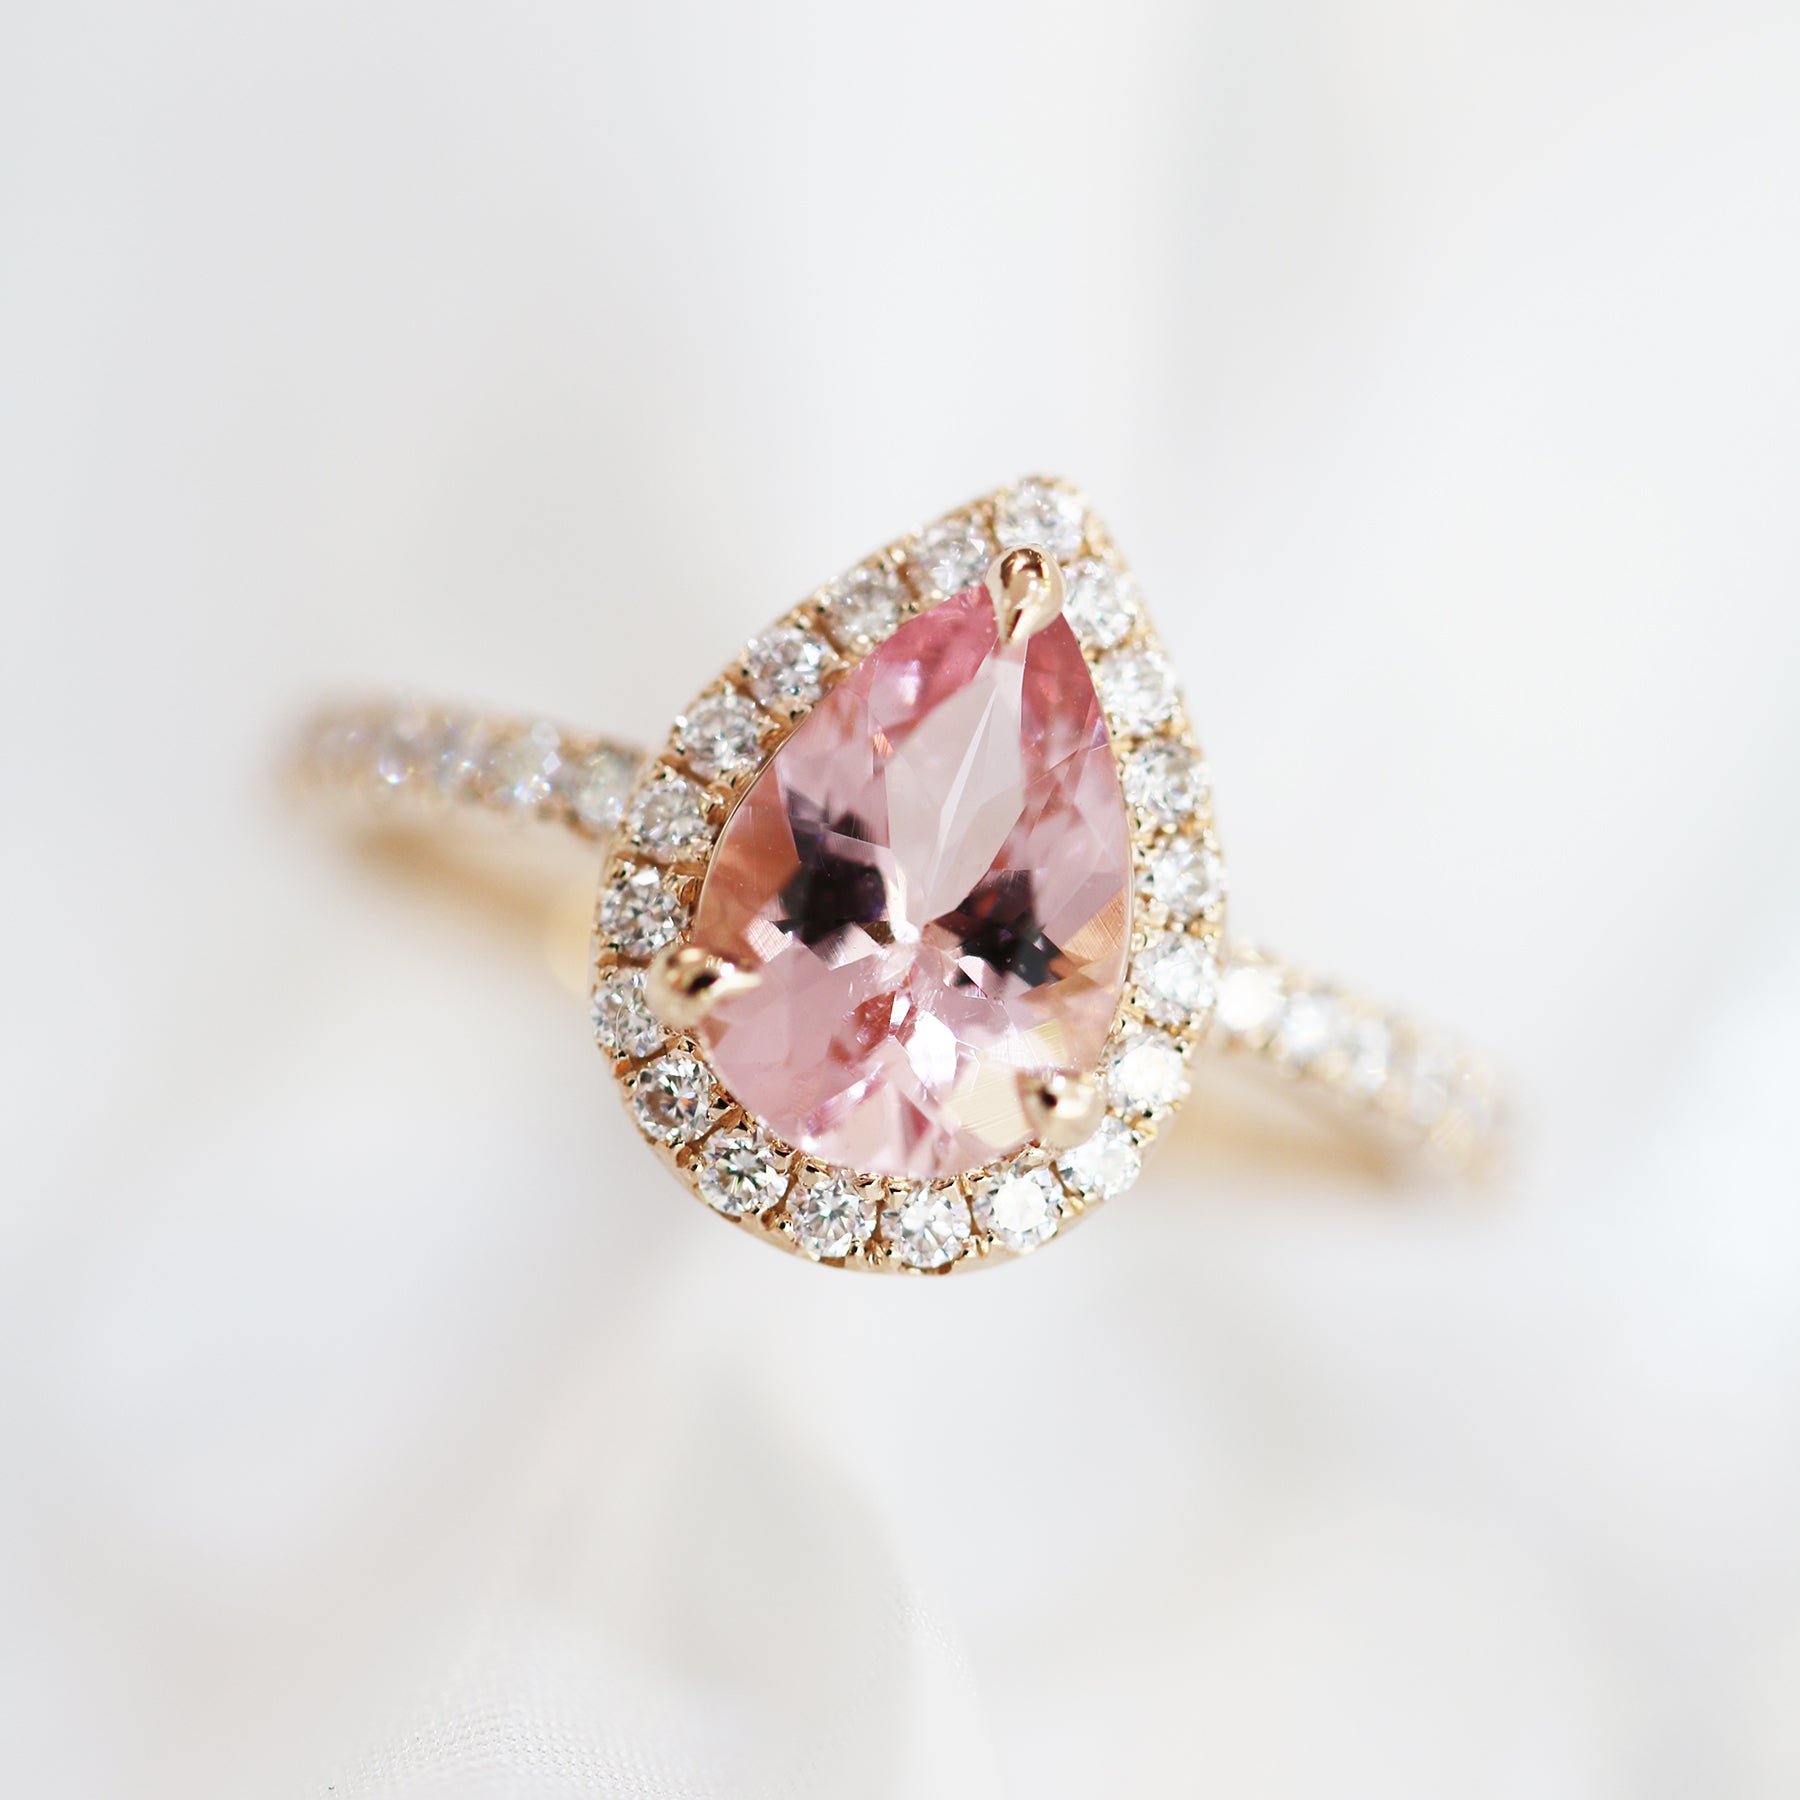 18k玫瑰金粉光環梨形切割粉紅摩根石鑽石戒指 18k Rose Gold Pear Shape Morganite Halo Diamond Ring